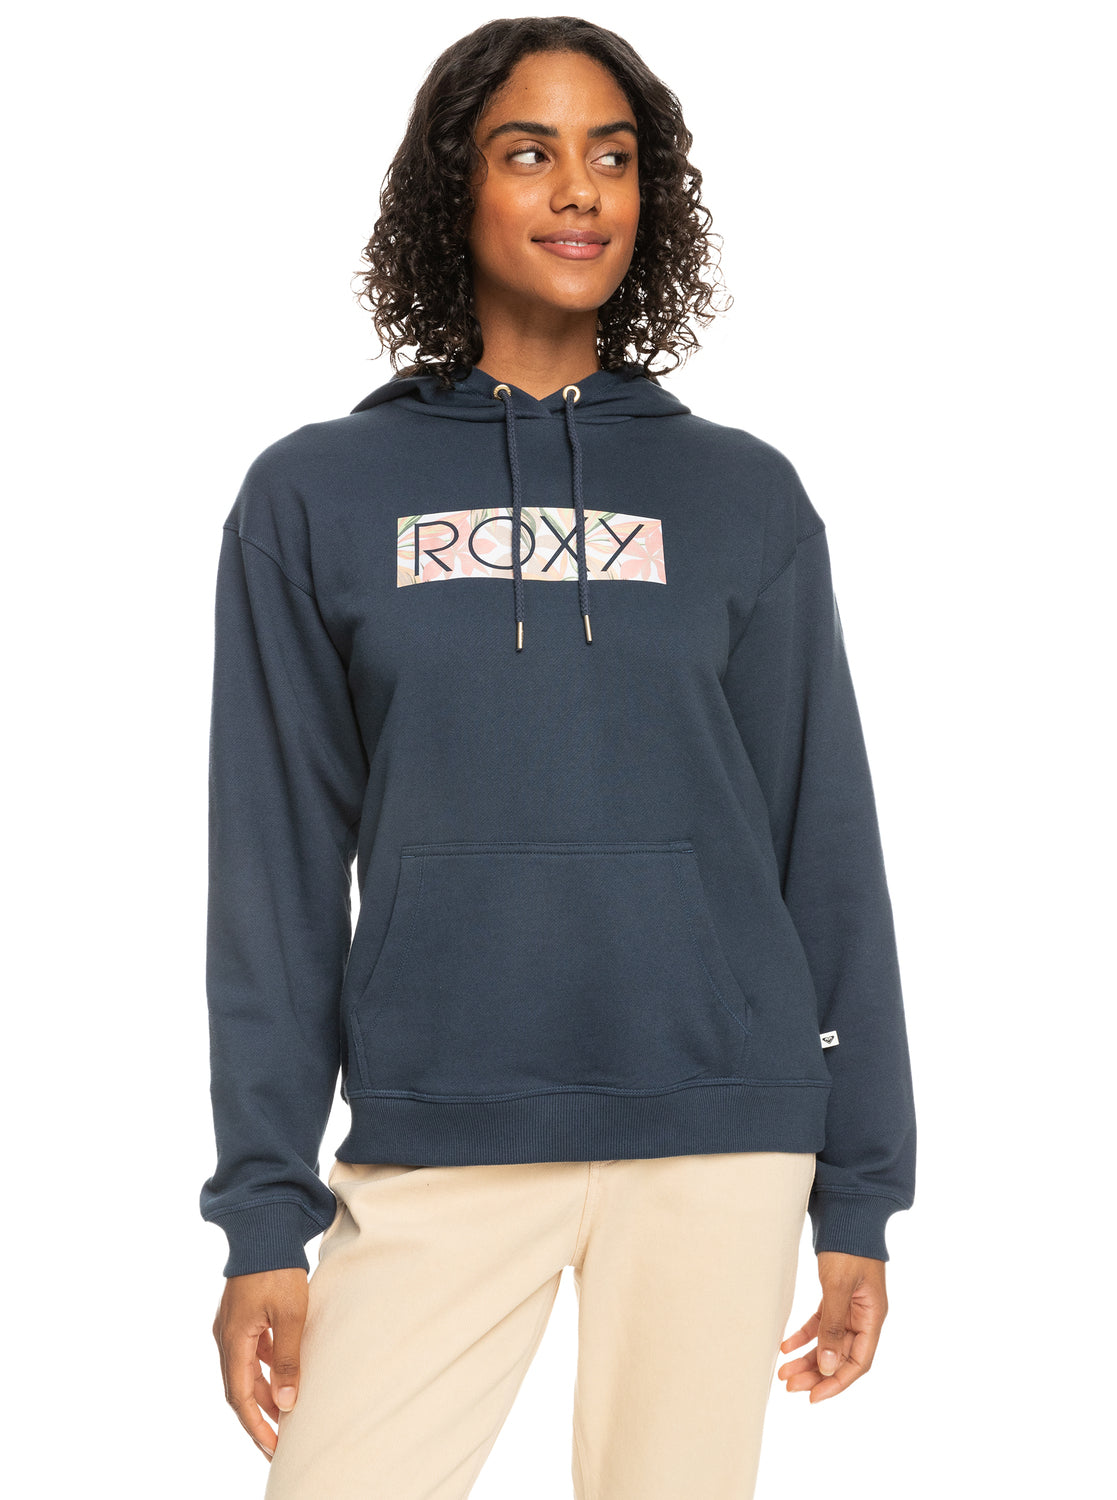 Roxy Forward Focus Hoodie | Roxy | Portwest - The Outdoor Shop